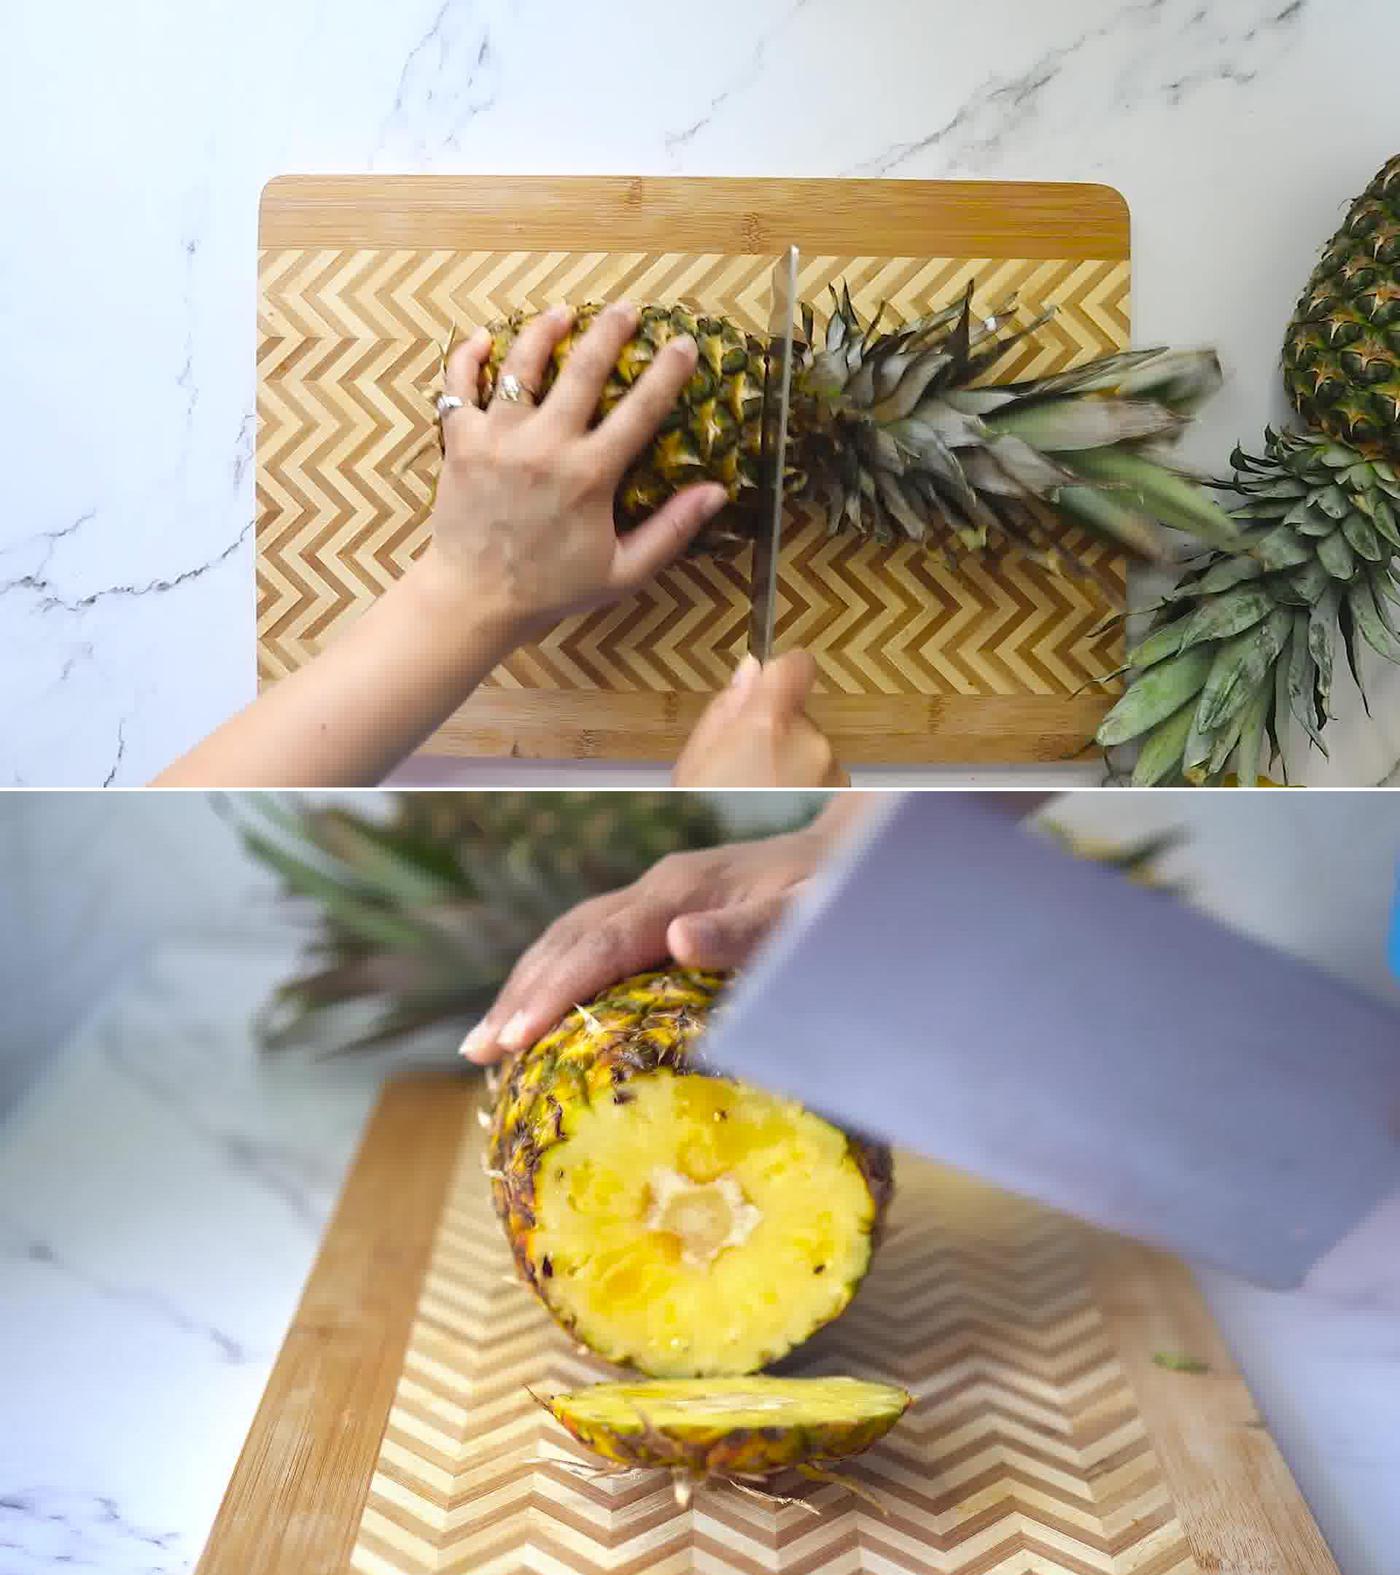 Fresh Pineapple Juice Recipe - Sandhya's Kitchen